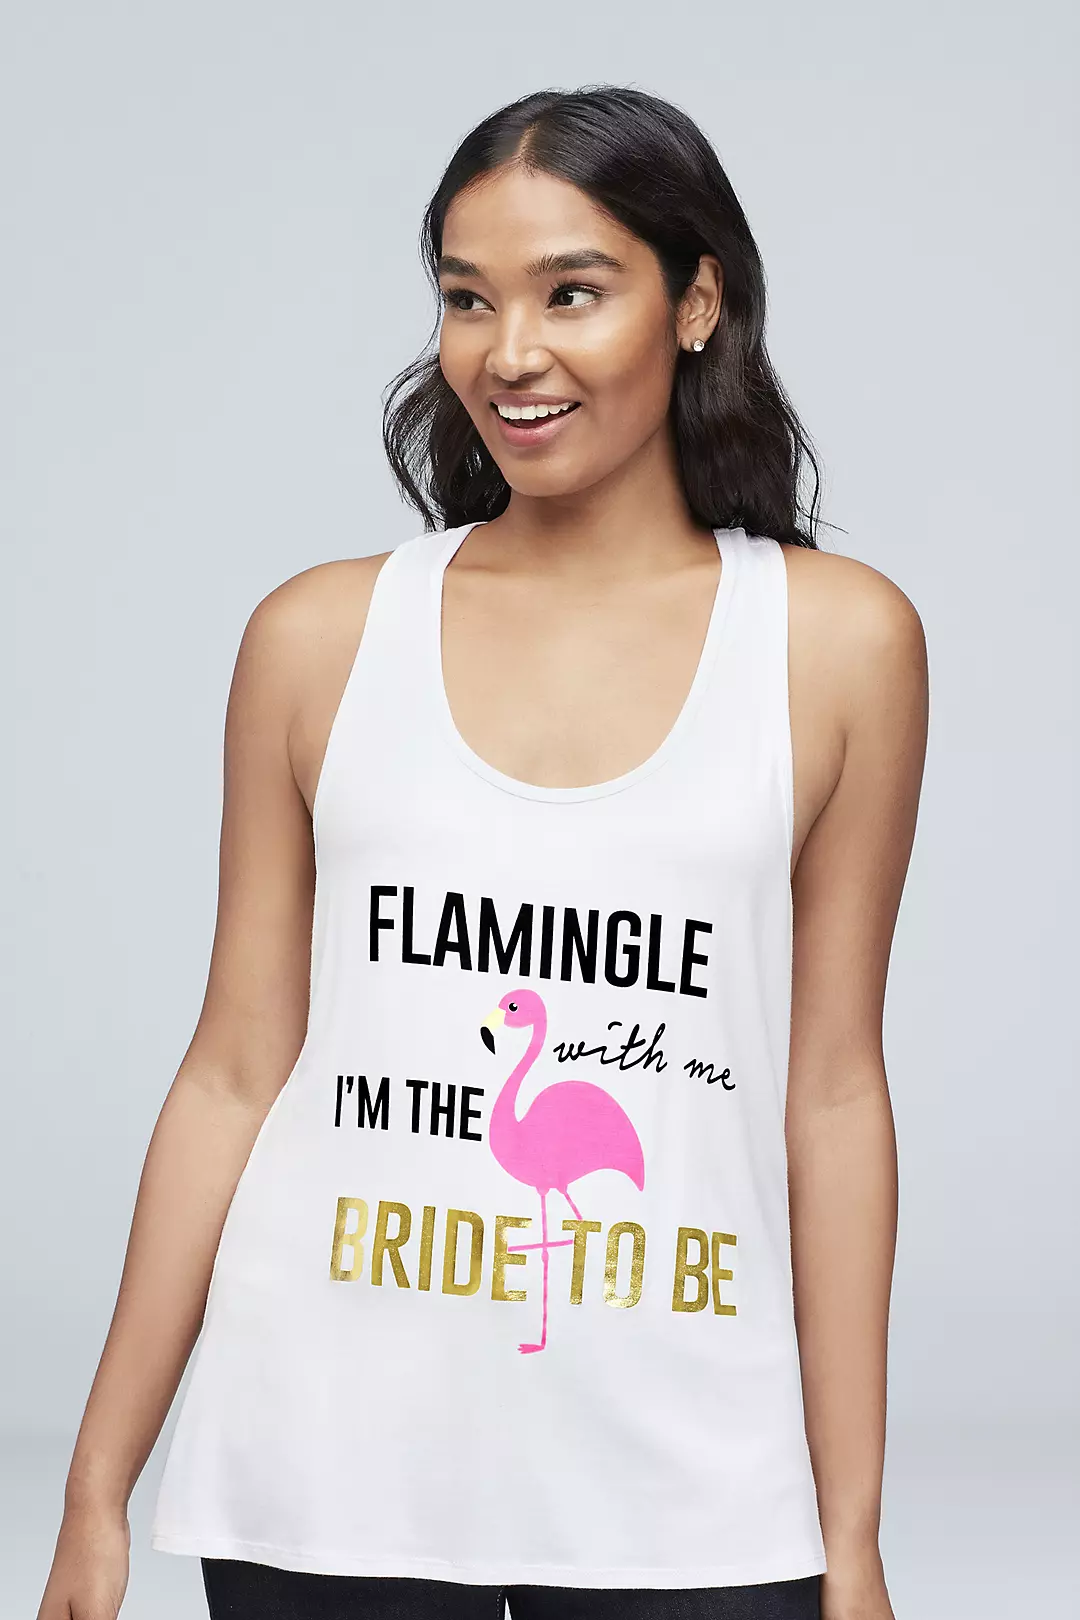 Flamingle Bride to Be Racerback Tank Top Image